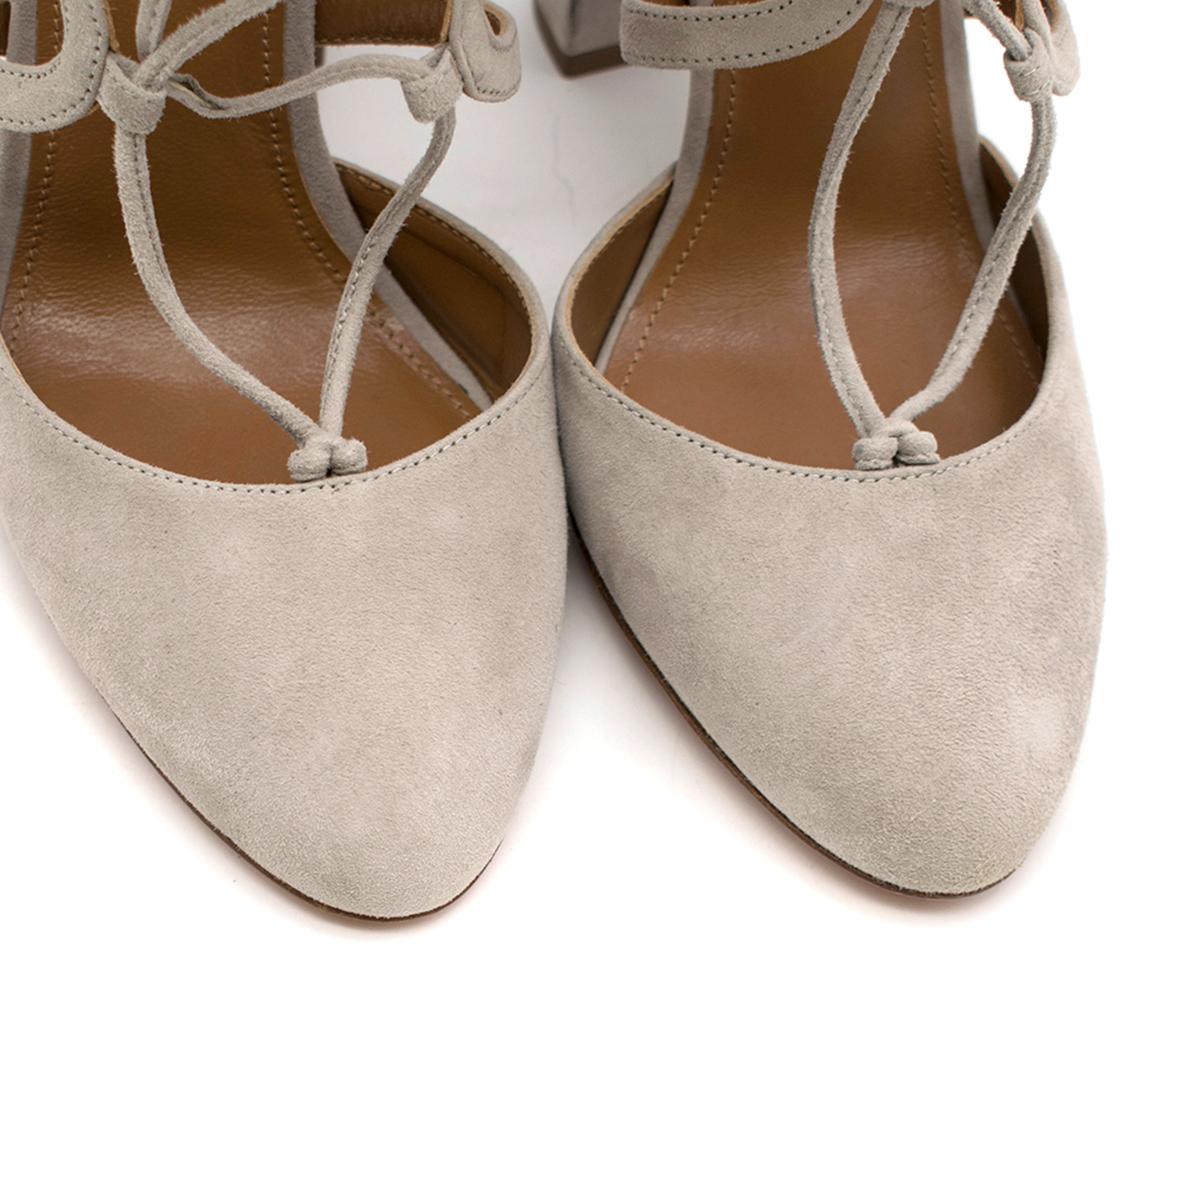 grey suede lace up heels